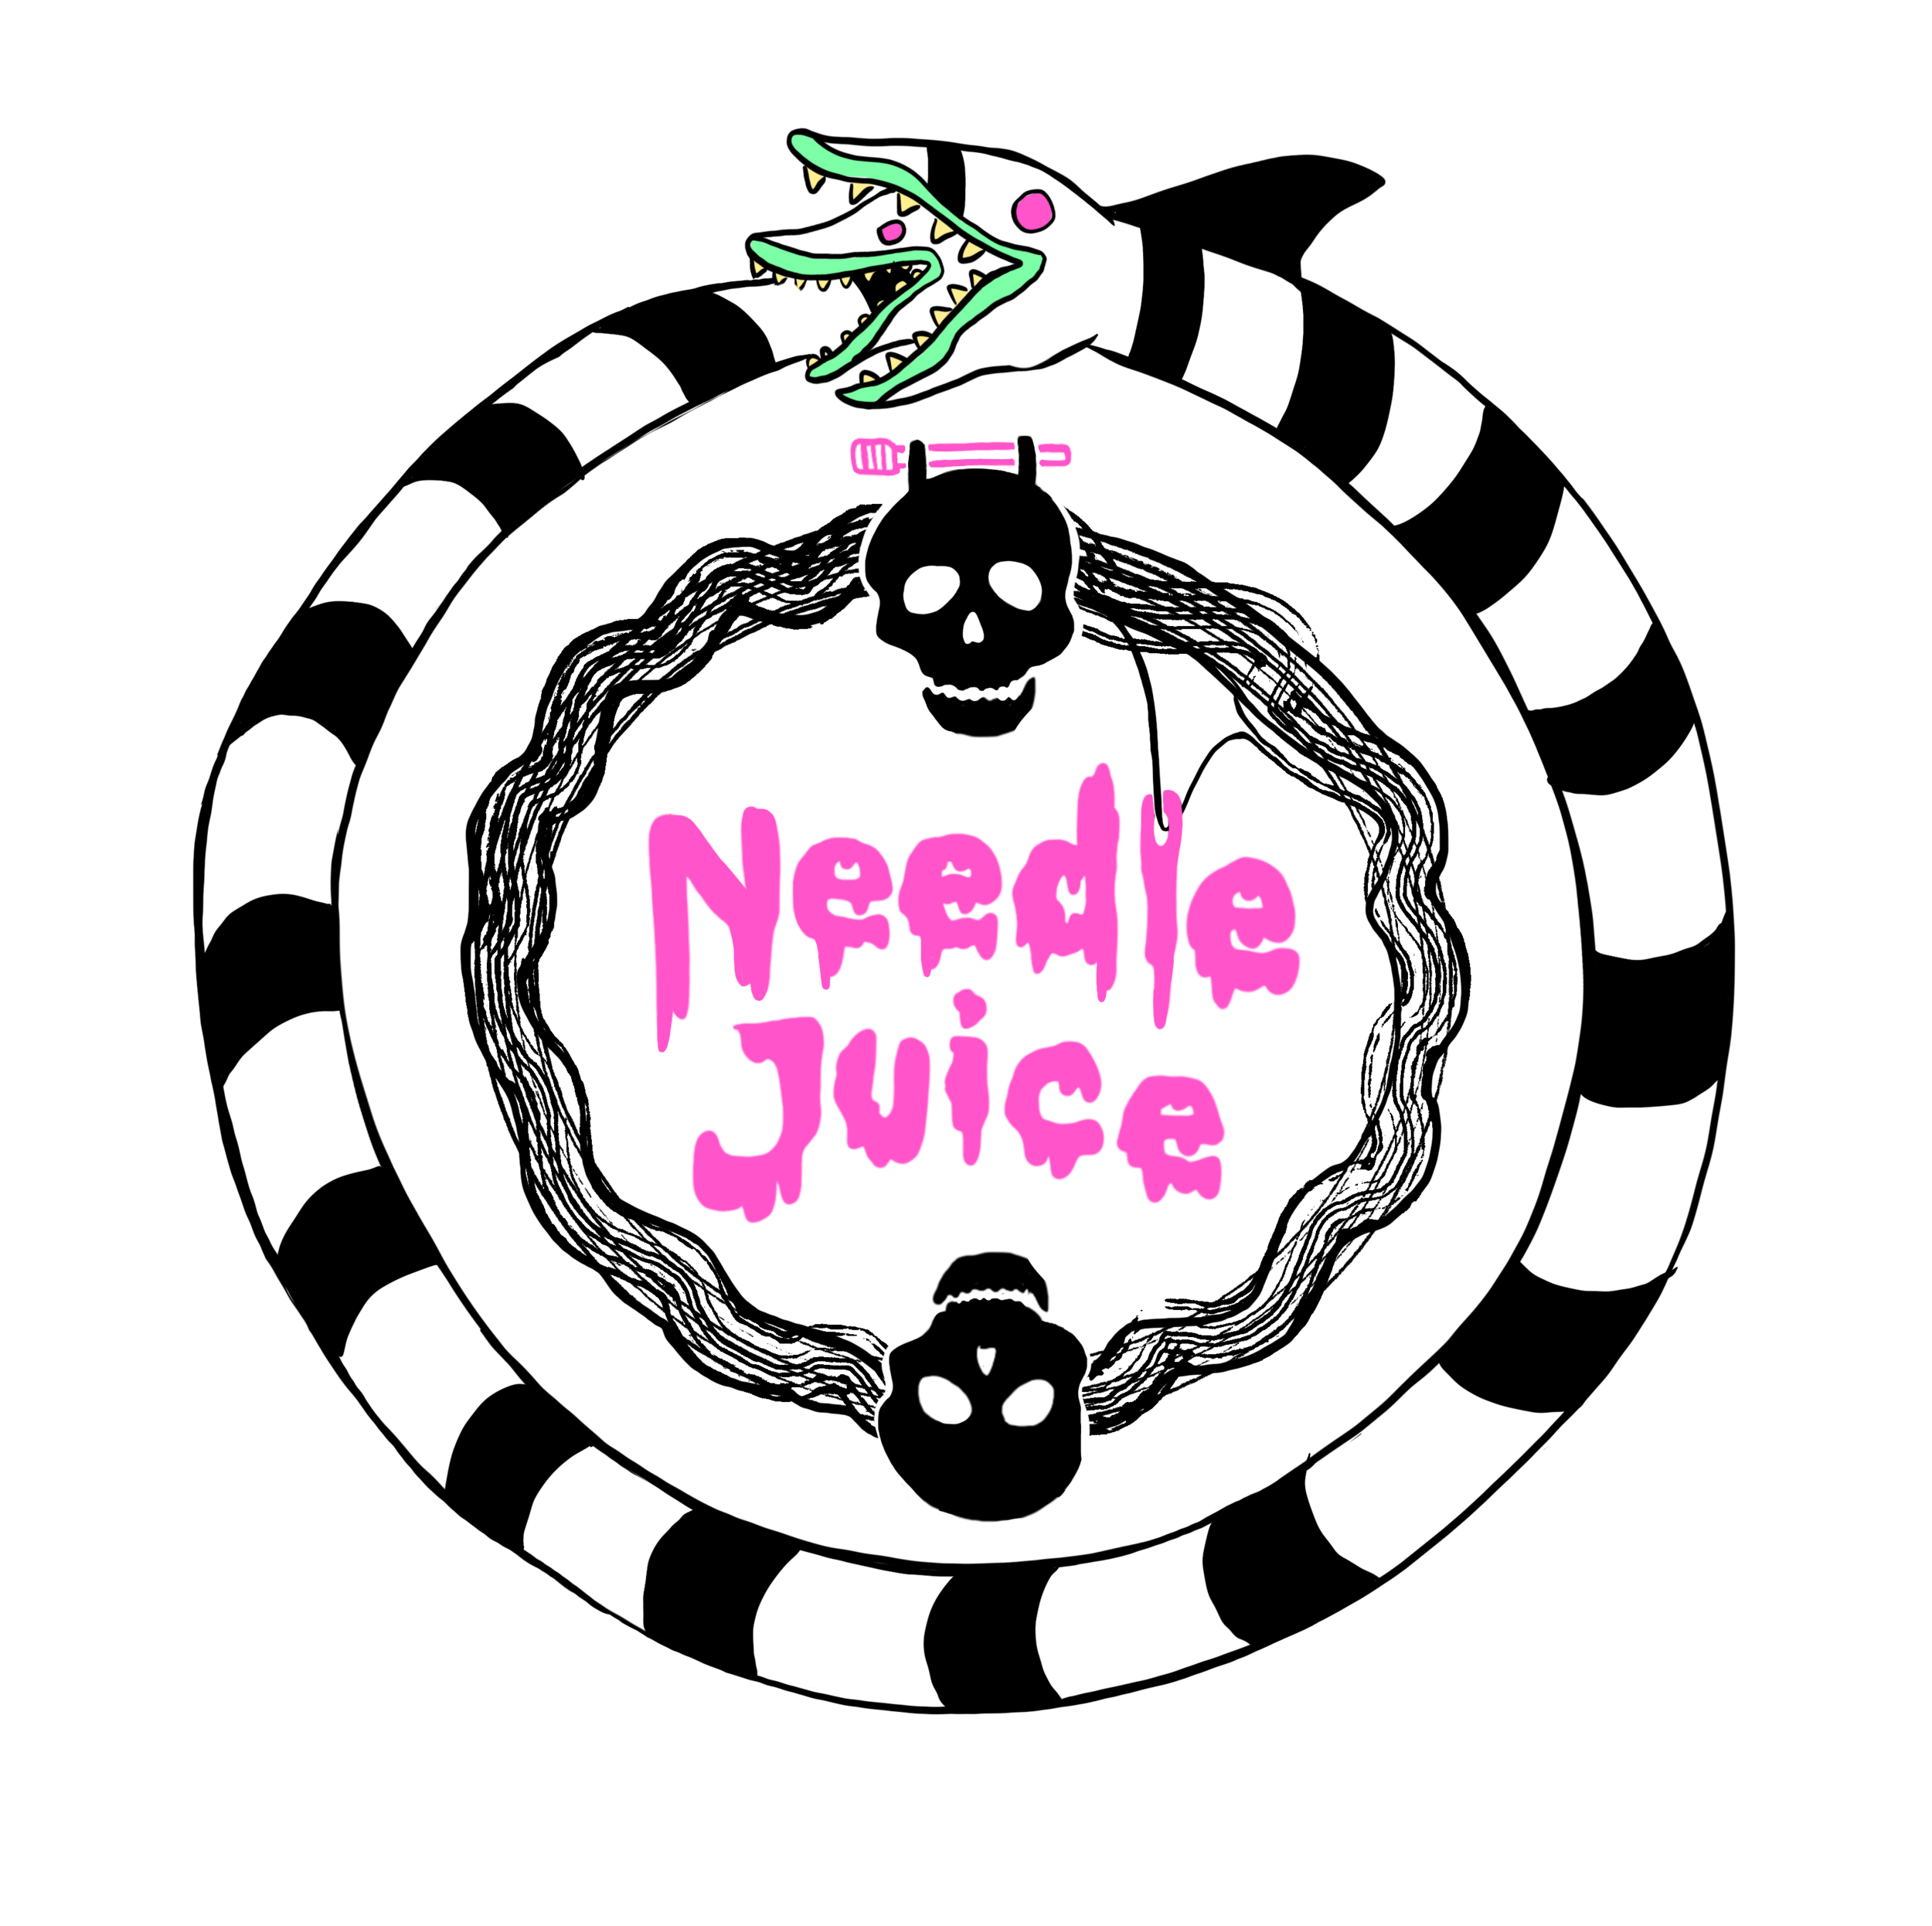 NeedleJuice-Sandworm.png